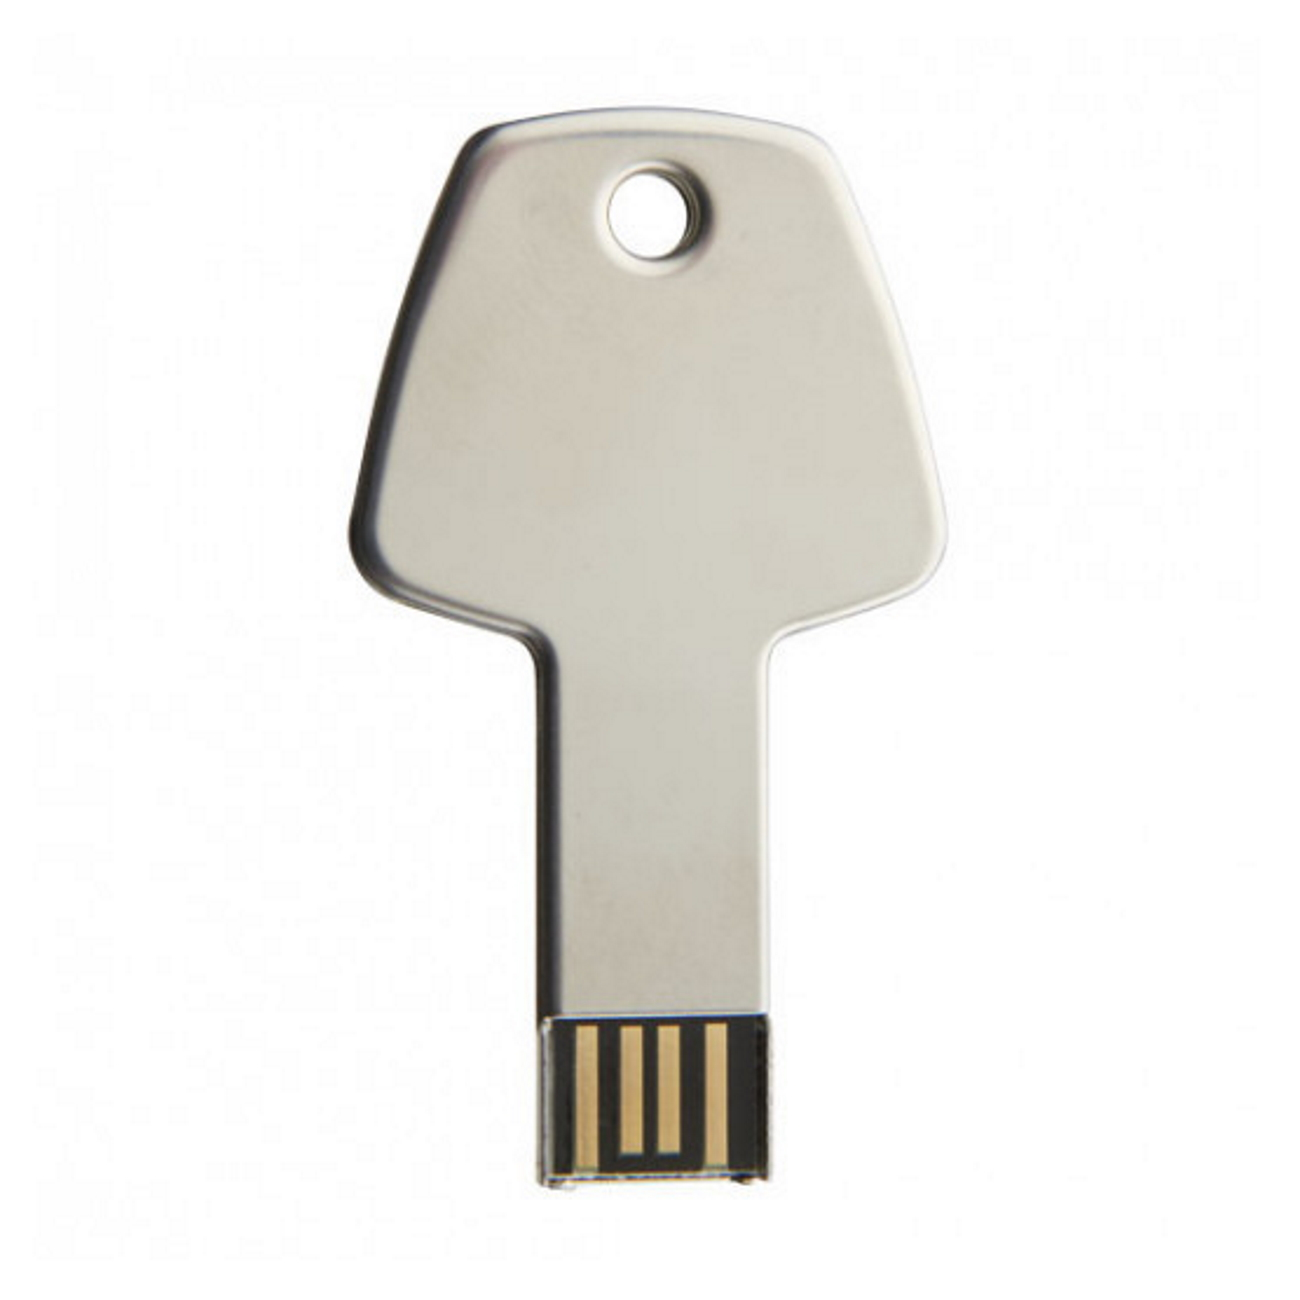 USB GERMANY ®Schlüssel 32 Key GB) USB-Stick (Silber